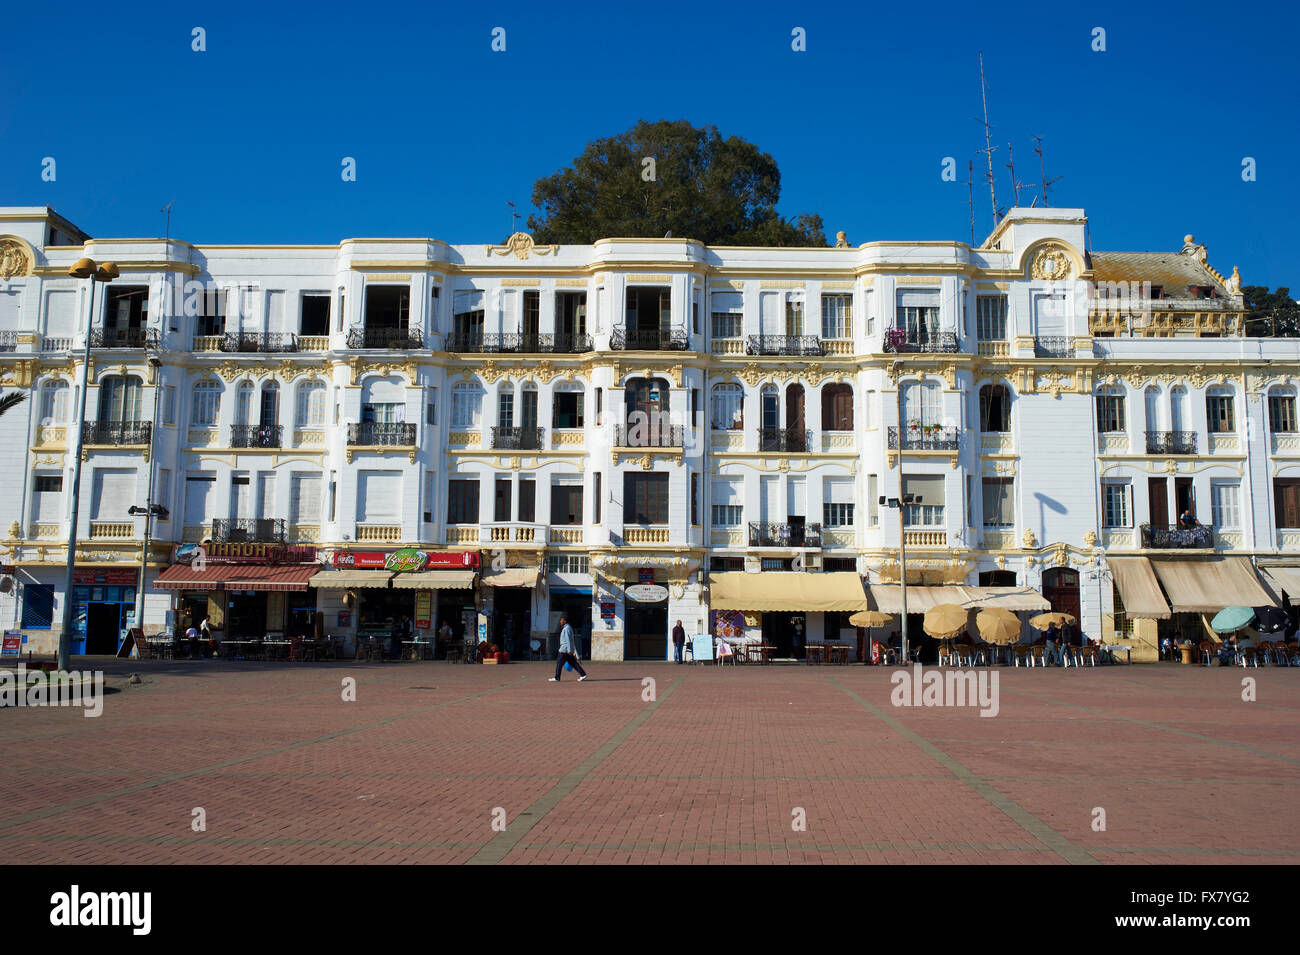 Marruecos, Tánger, Medina, la ciudad vieja, la calle Espagne Foto de stock